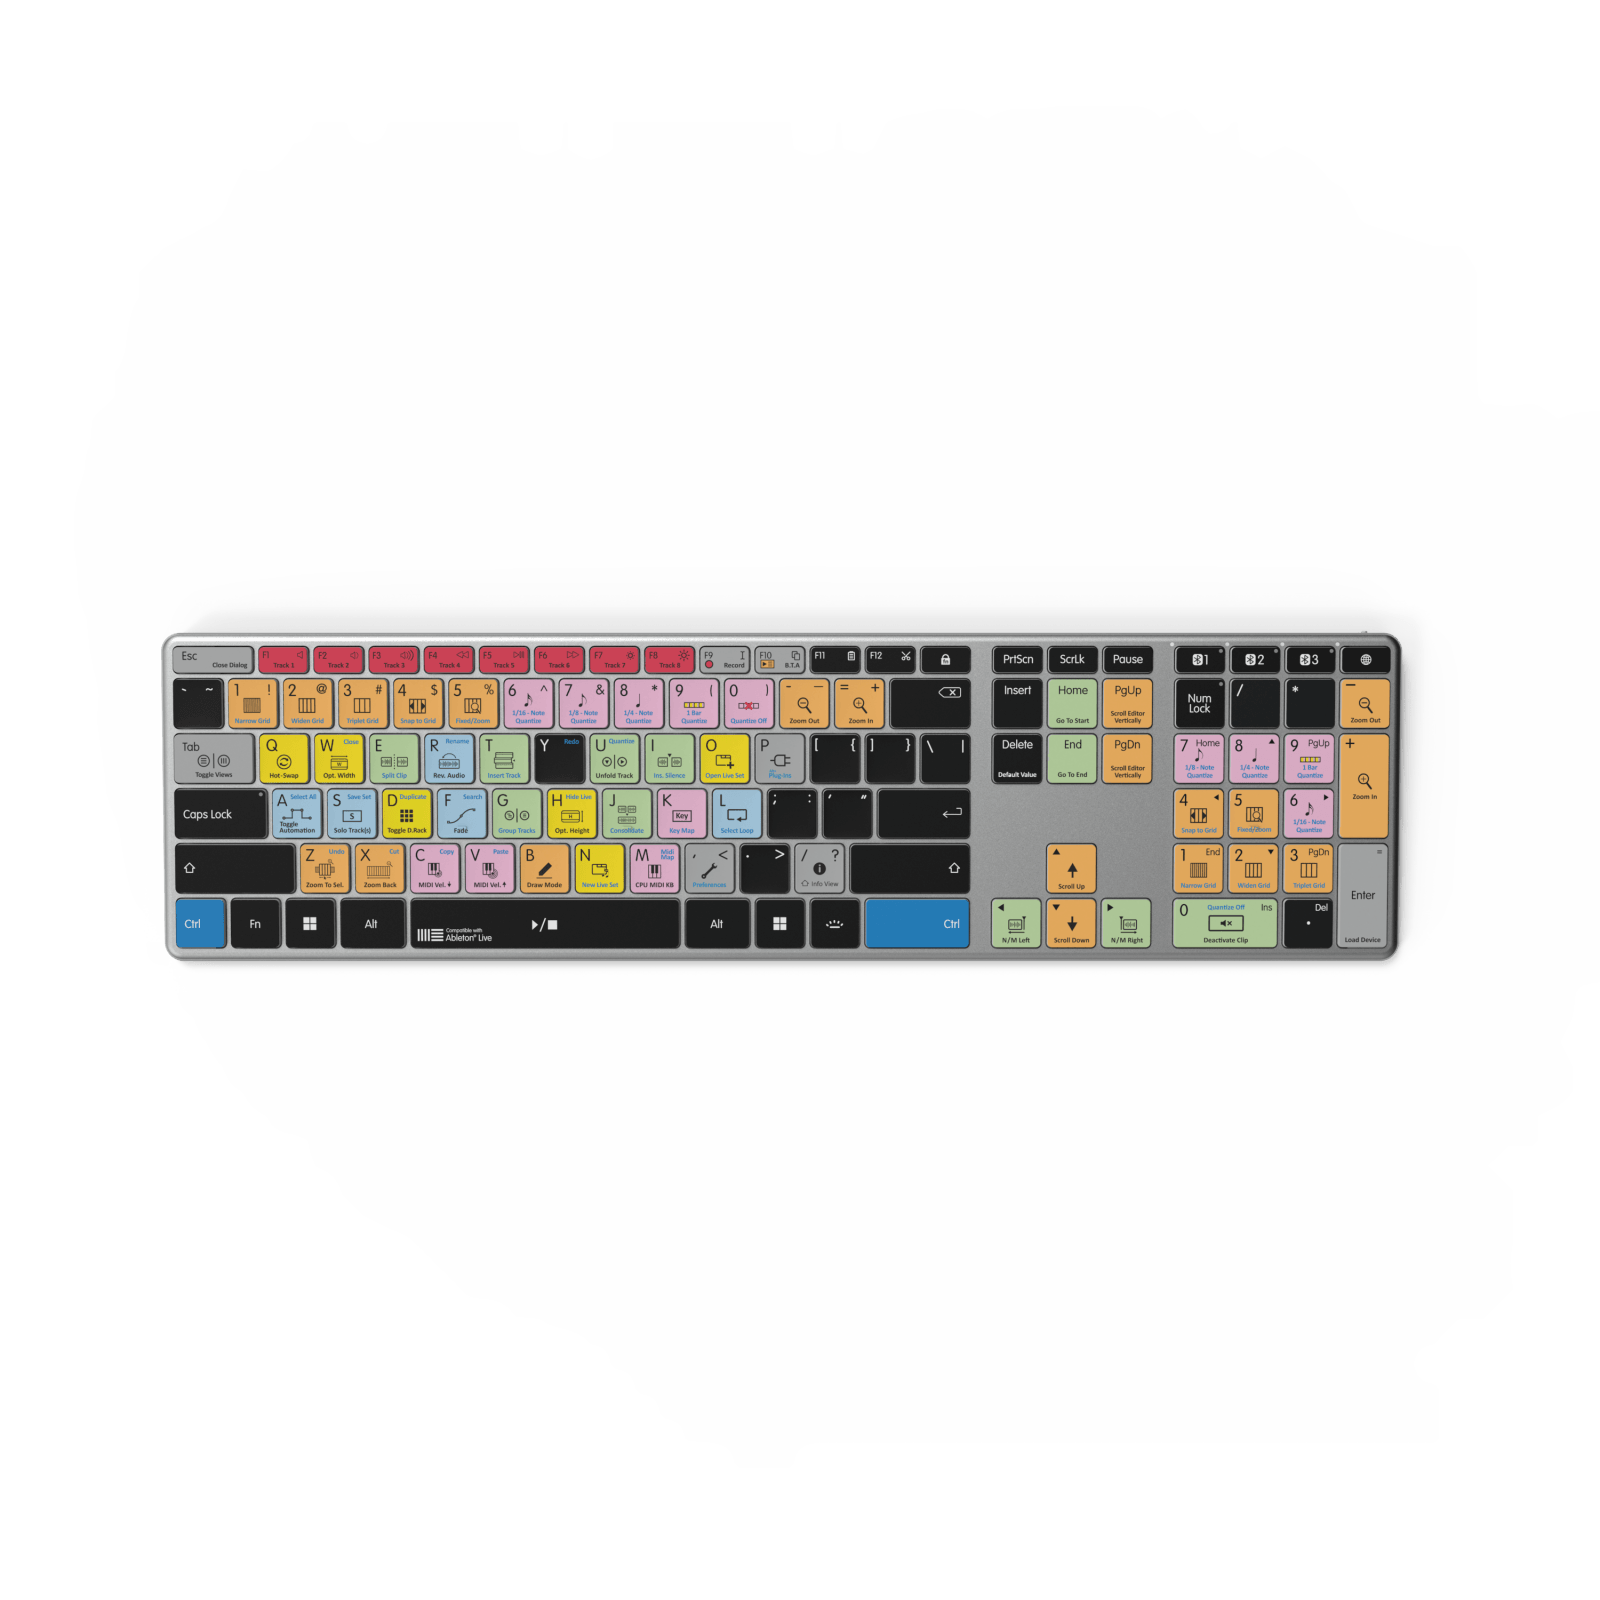 NEW Ableton Live Keyboard | Backlit & Wireless | Mac and PC - Editors Keys